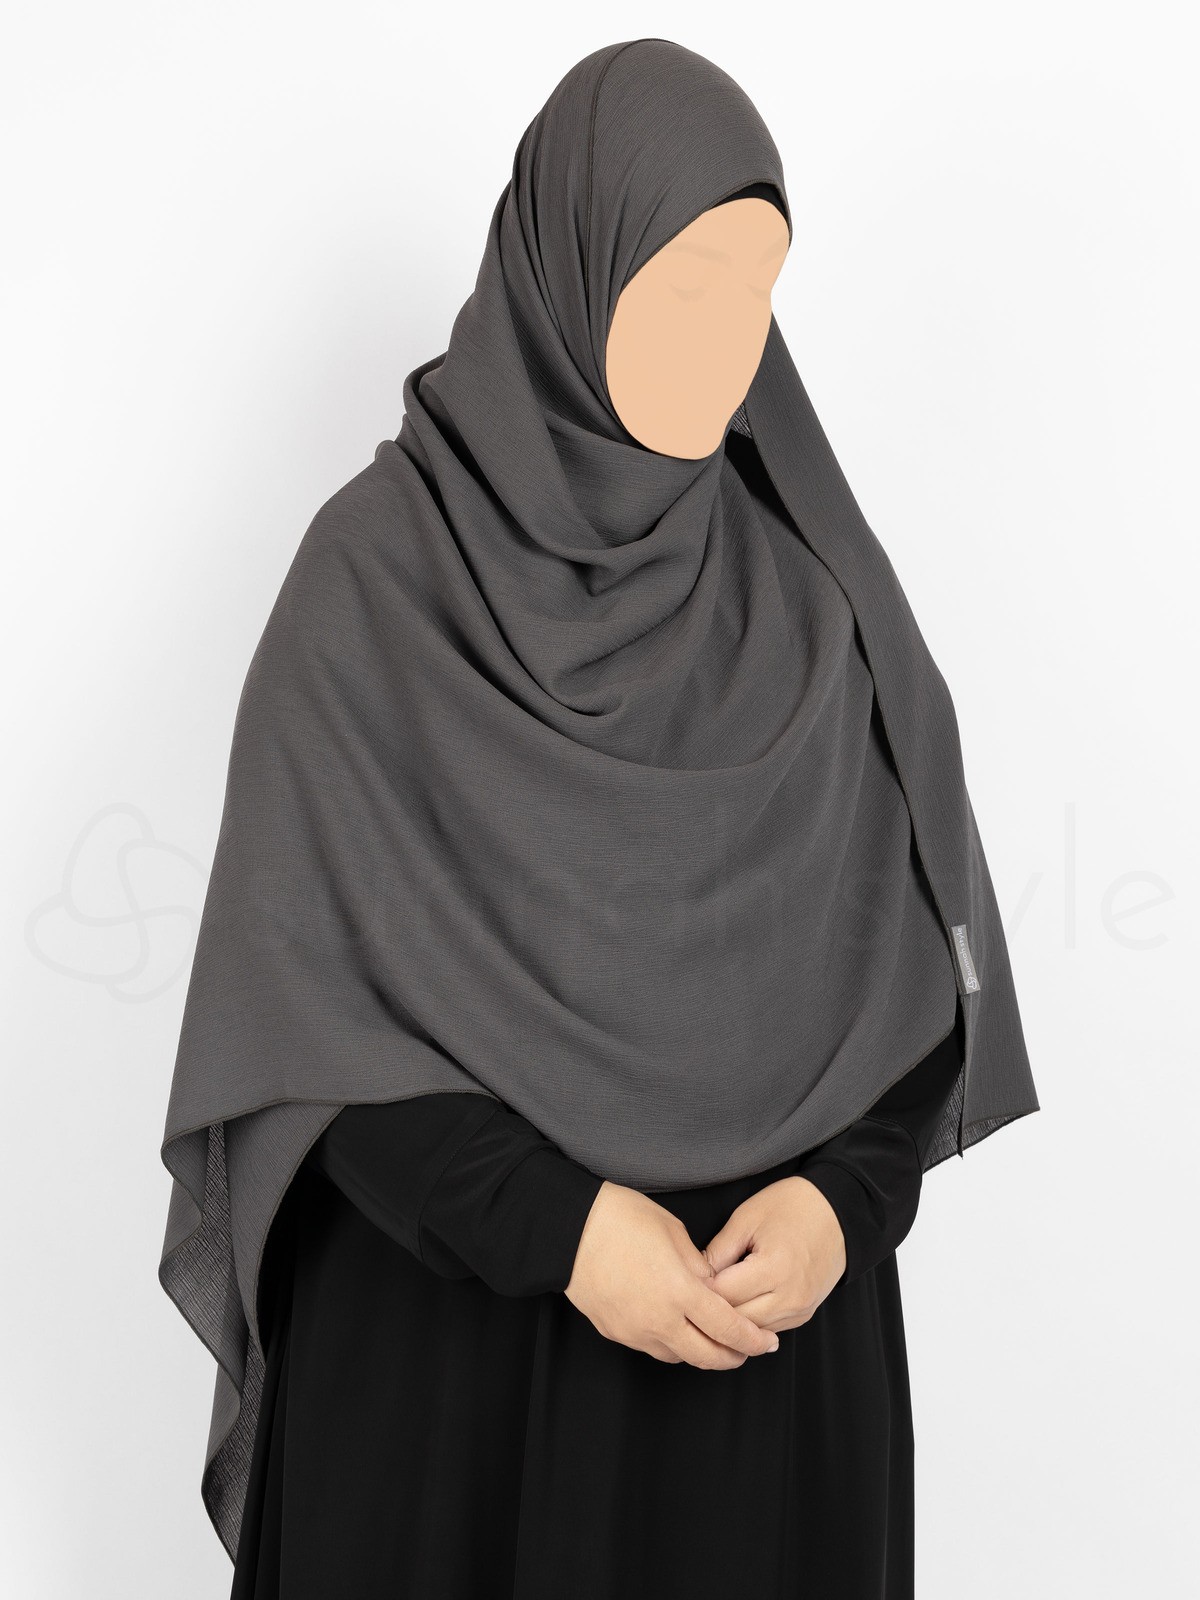 Sunnah Style - Brushed Shayla - XL (Army)